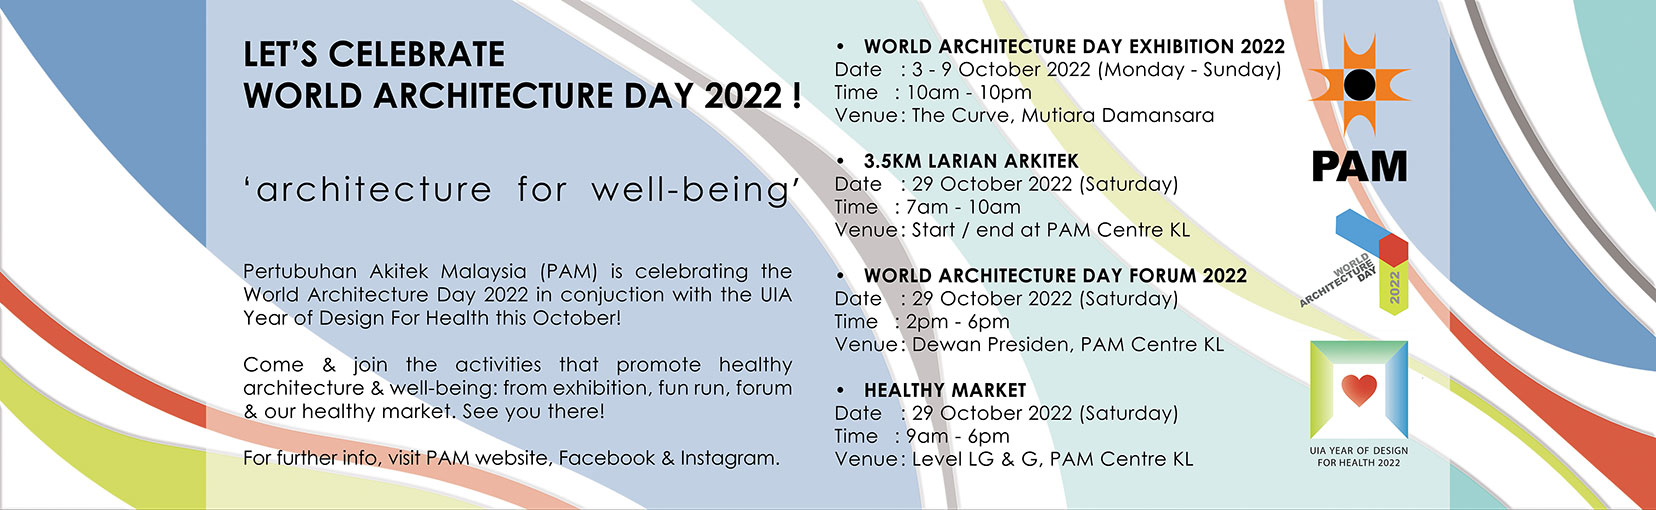 World Architecture Day 2022